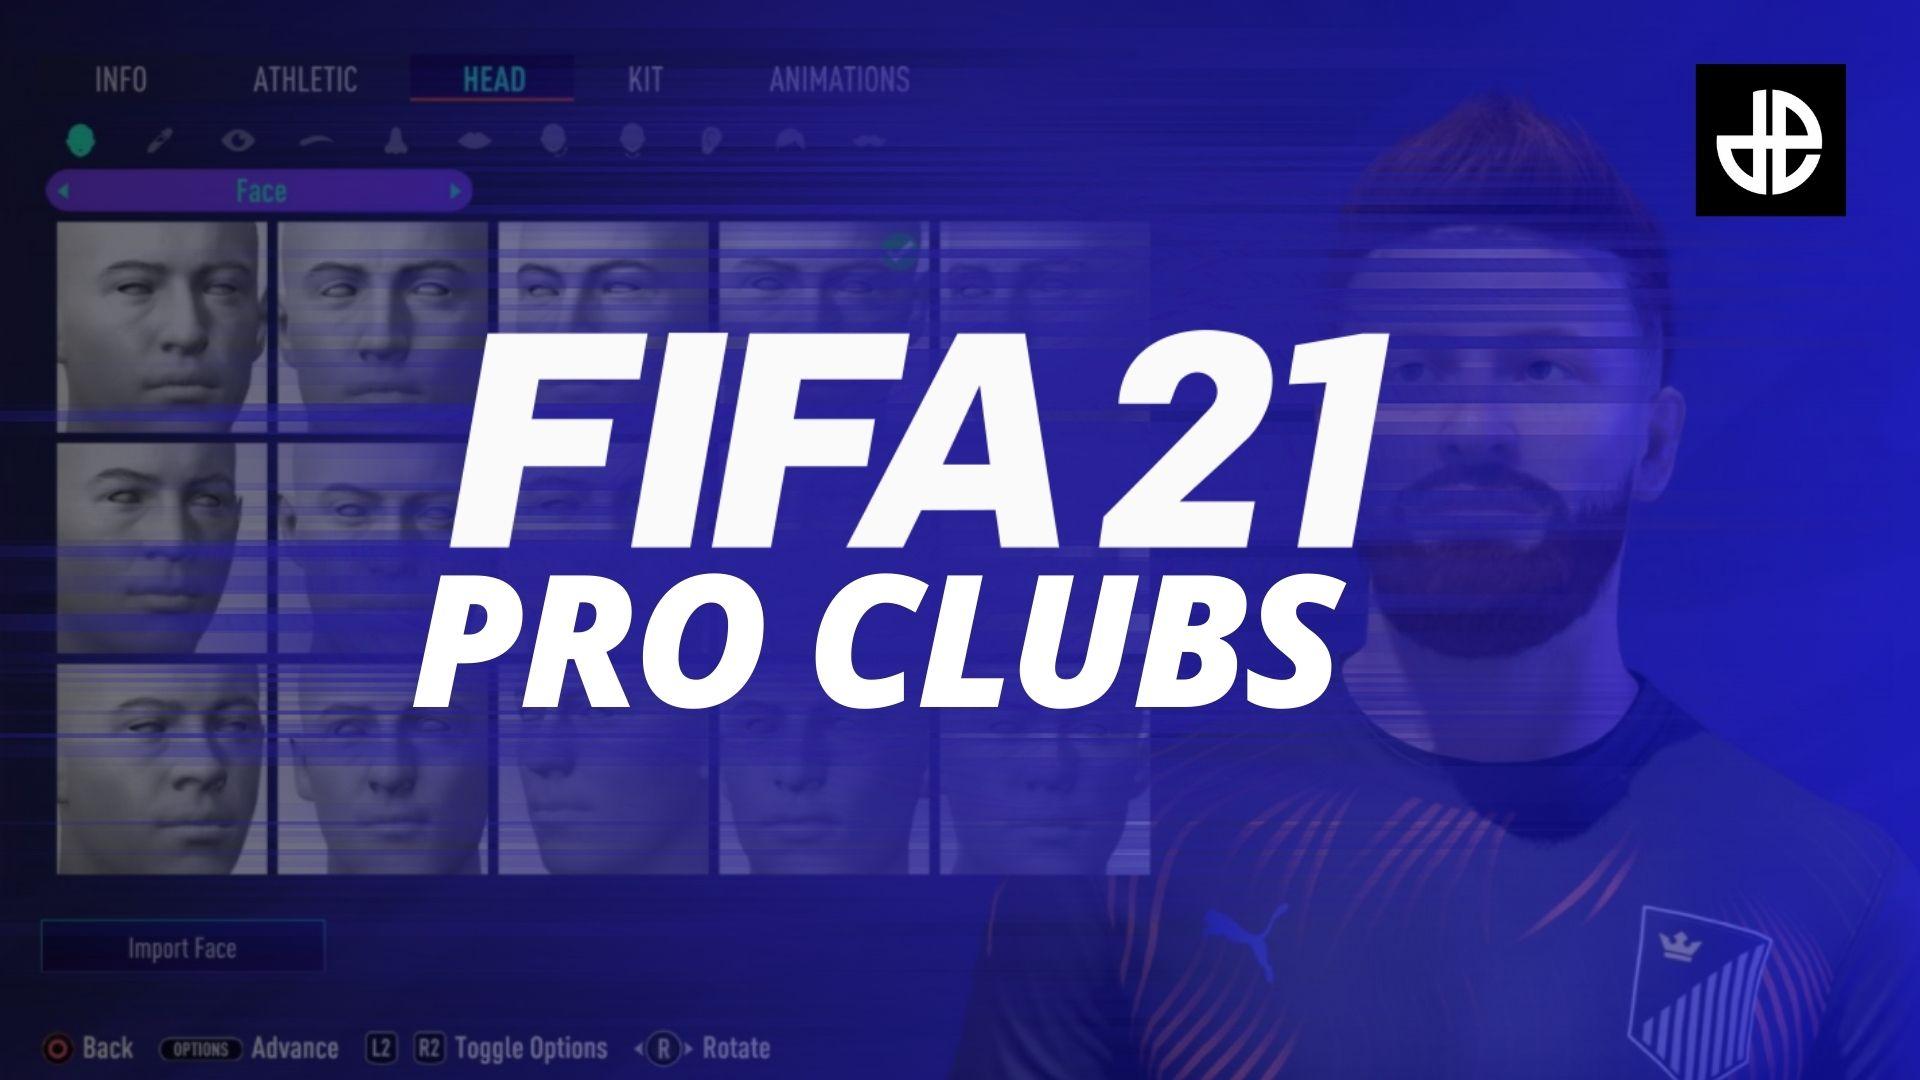 FIFA 21 Pro Clubs image